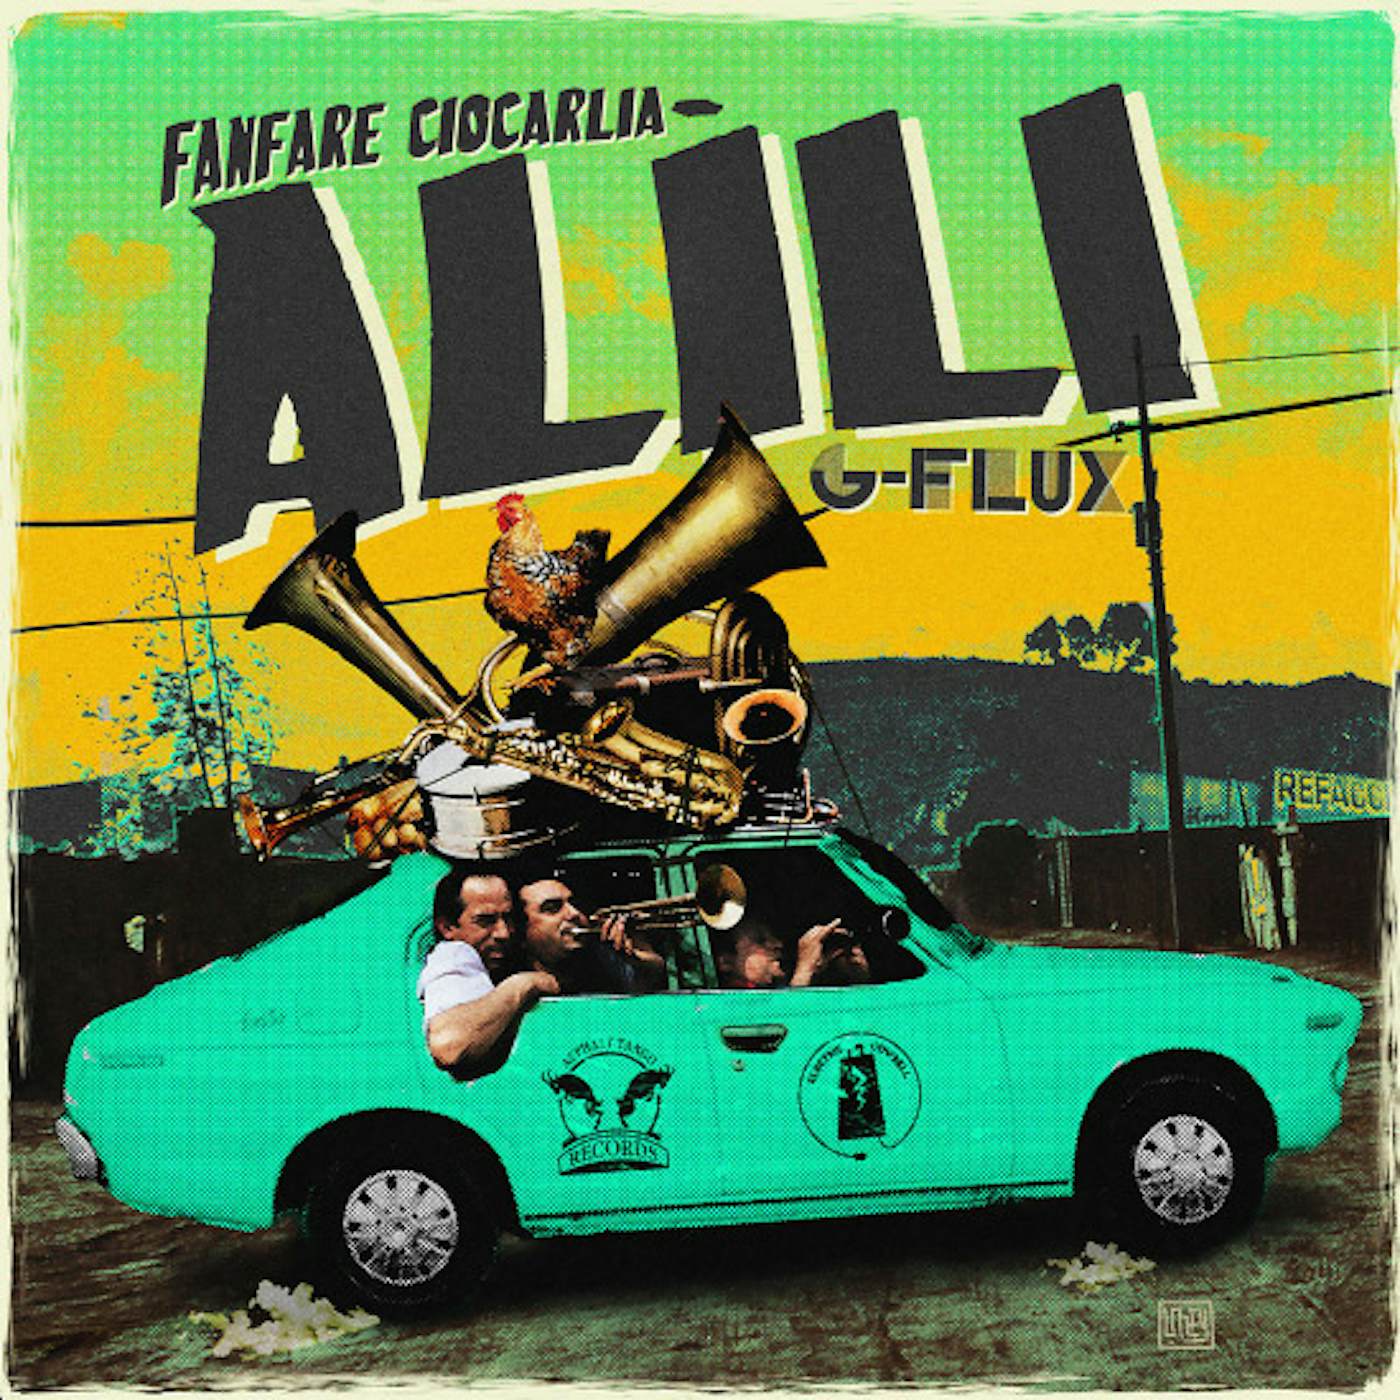 G-FLUX VS FANFARE CIOCARLIA Vinyl Record